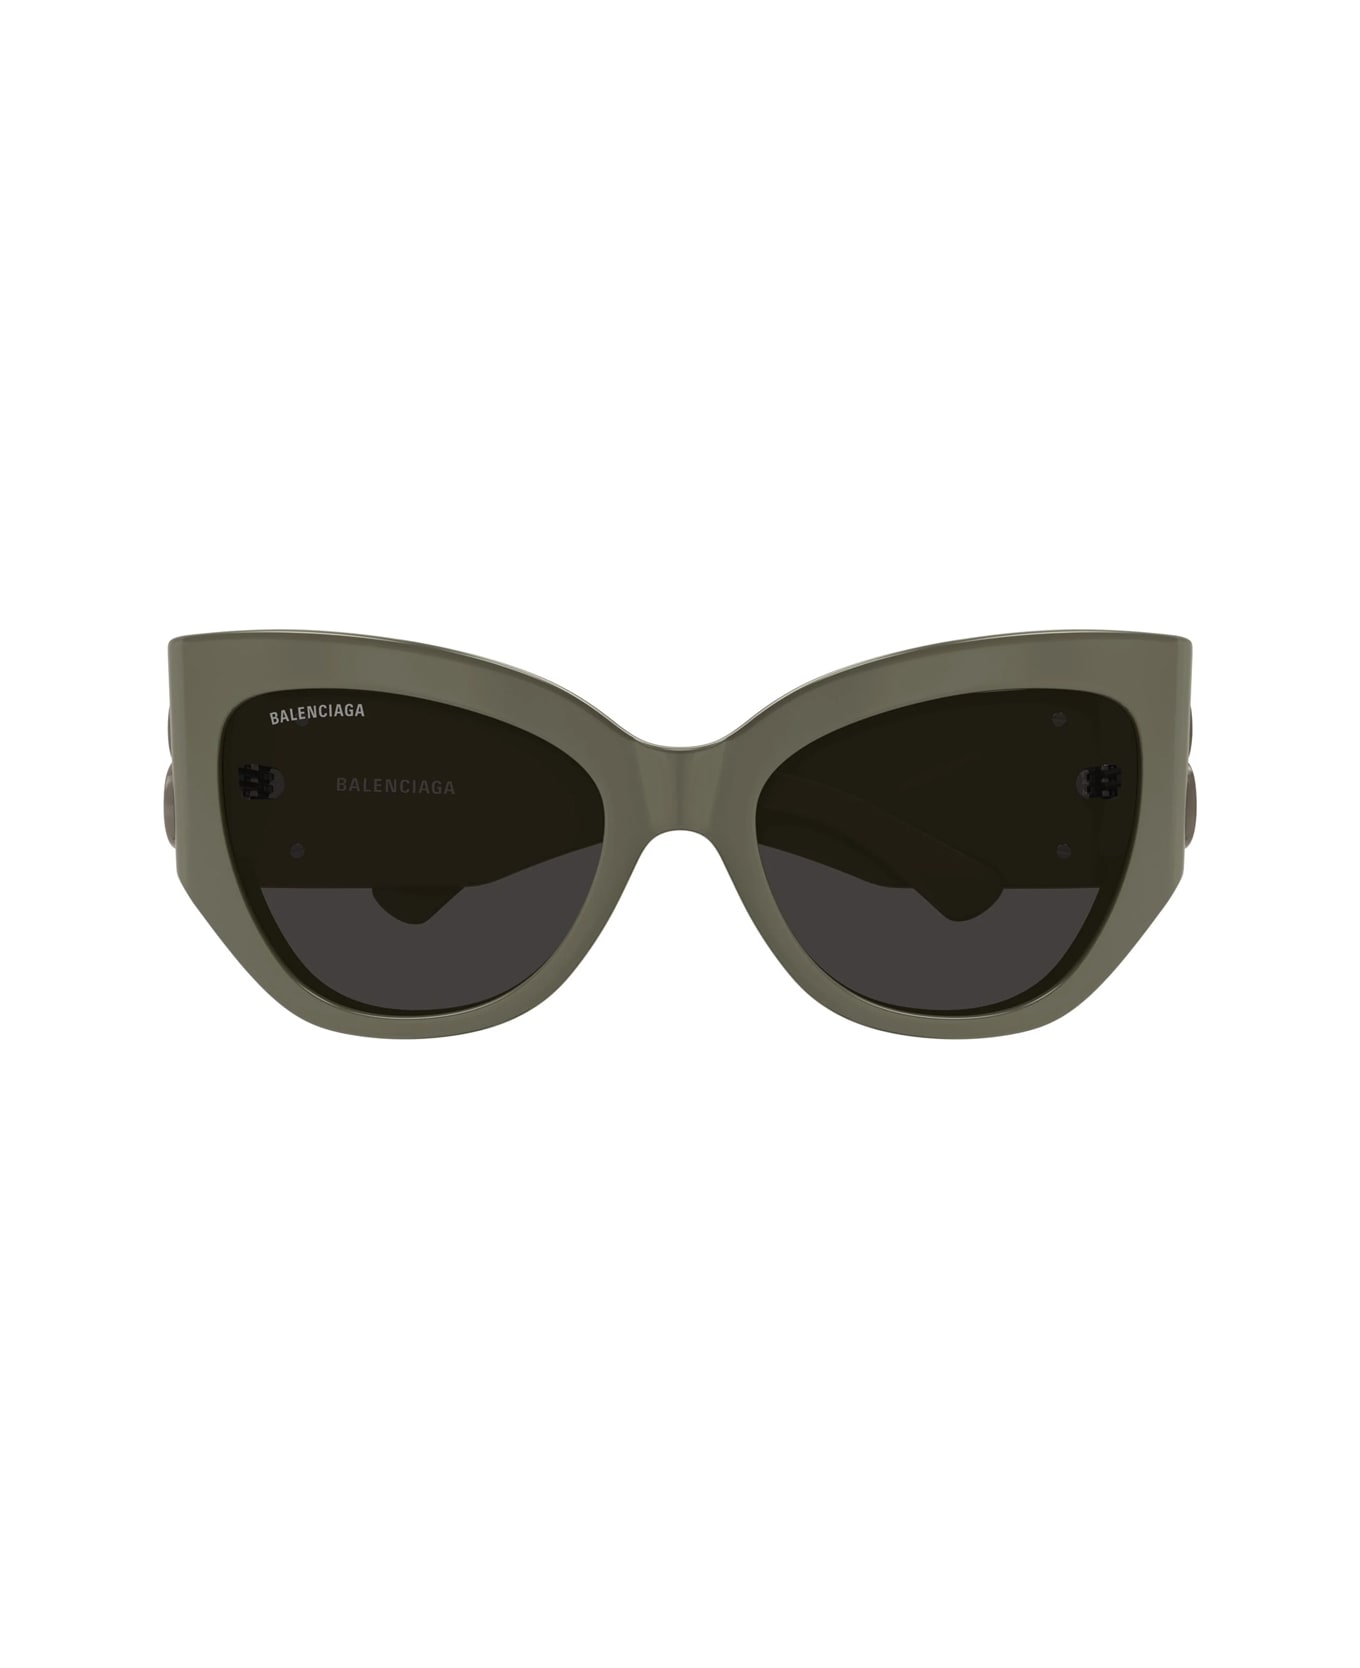 Balenciaga Eyewear Dinasty-linea Everyday Sunglasses - 004 BROWN BROWN GREY サングラス